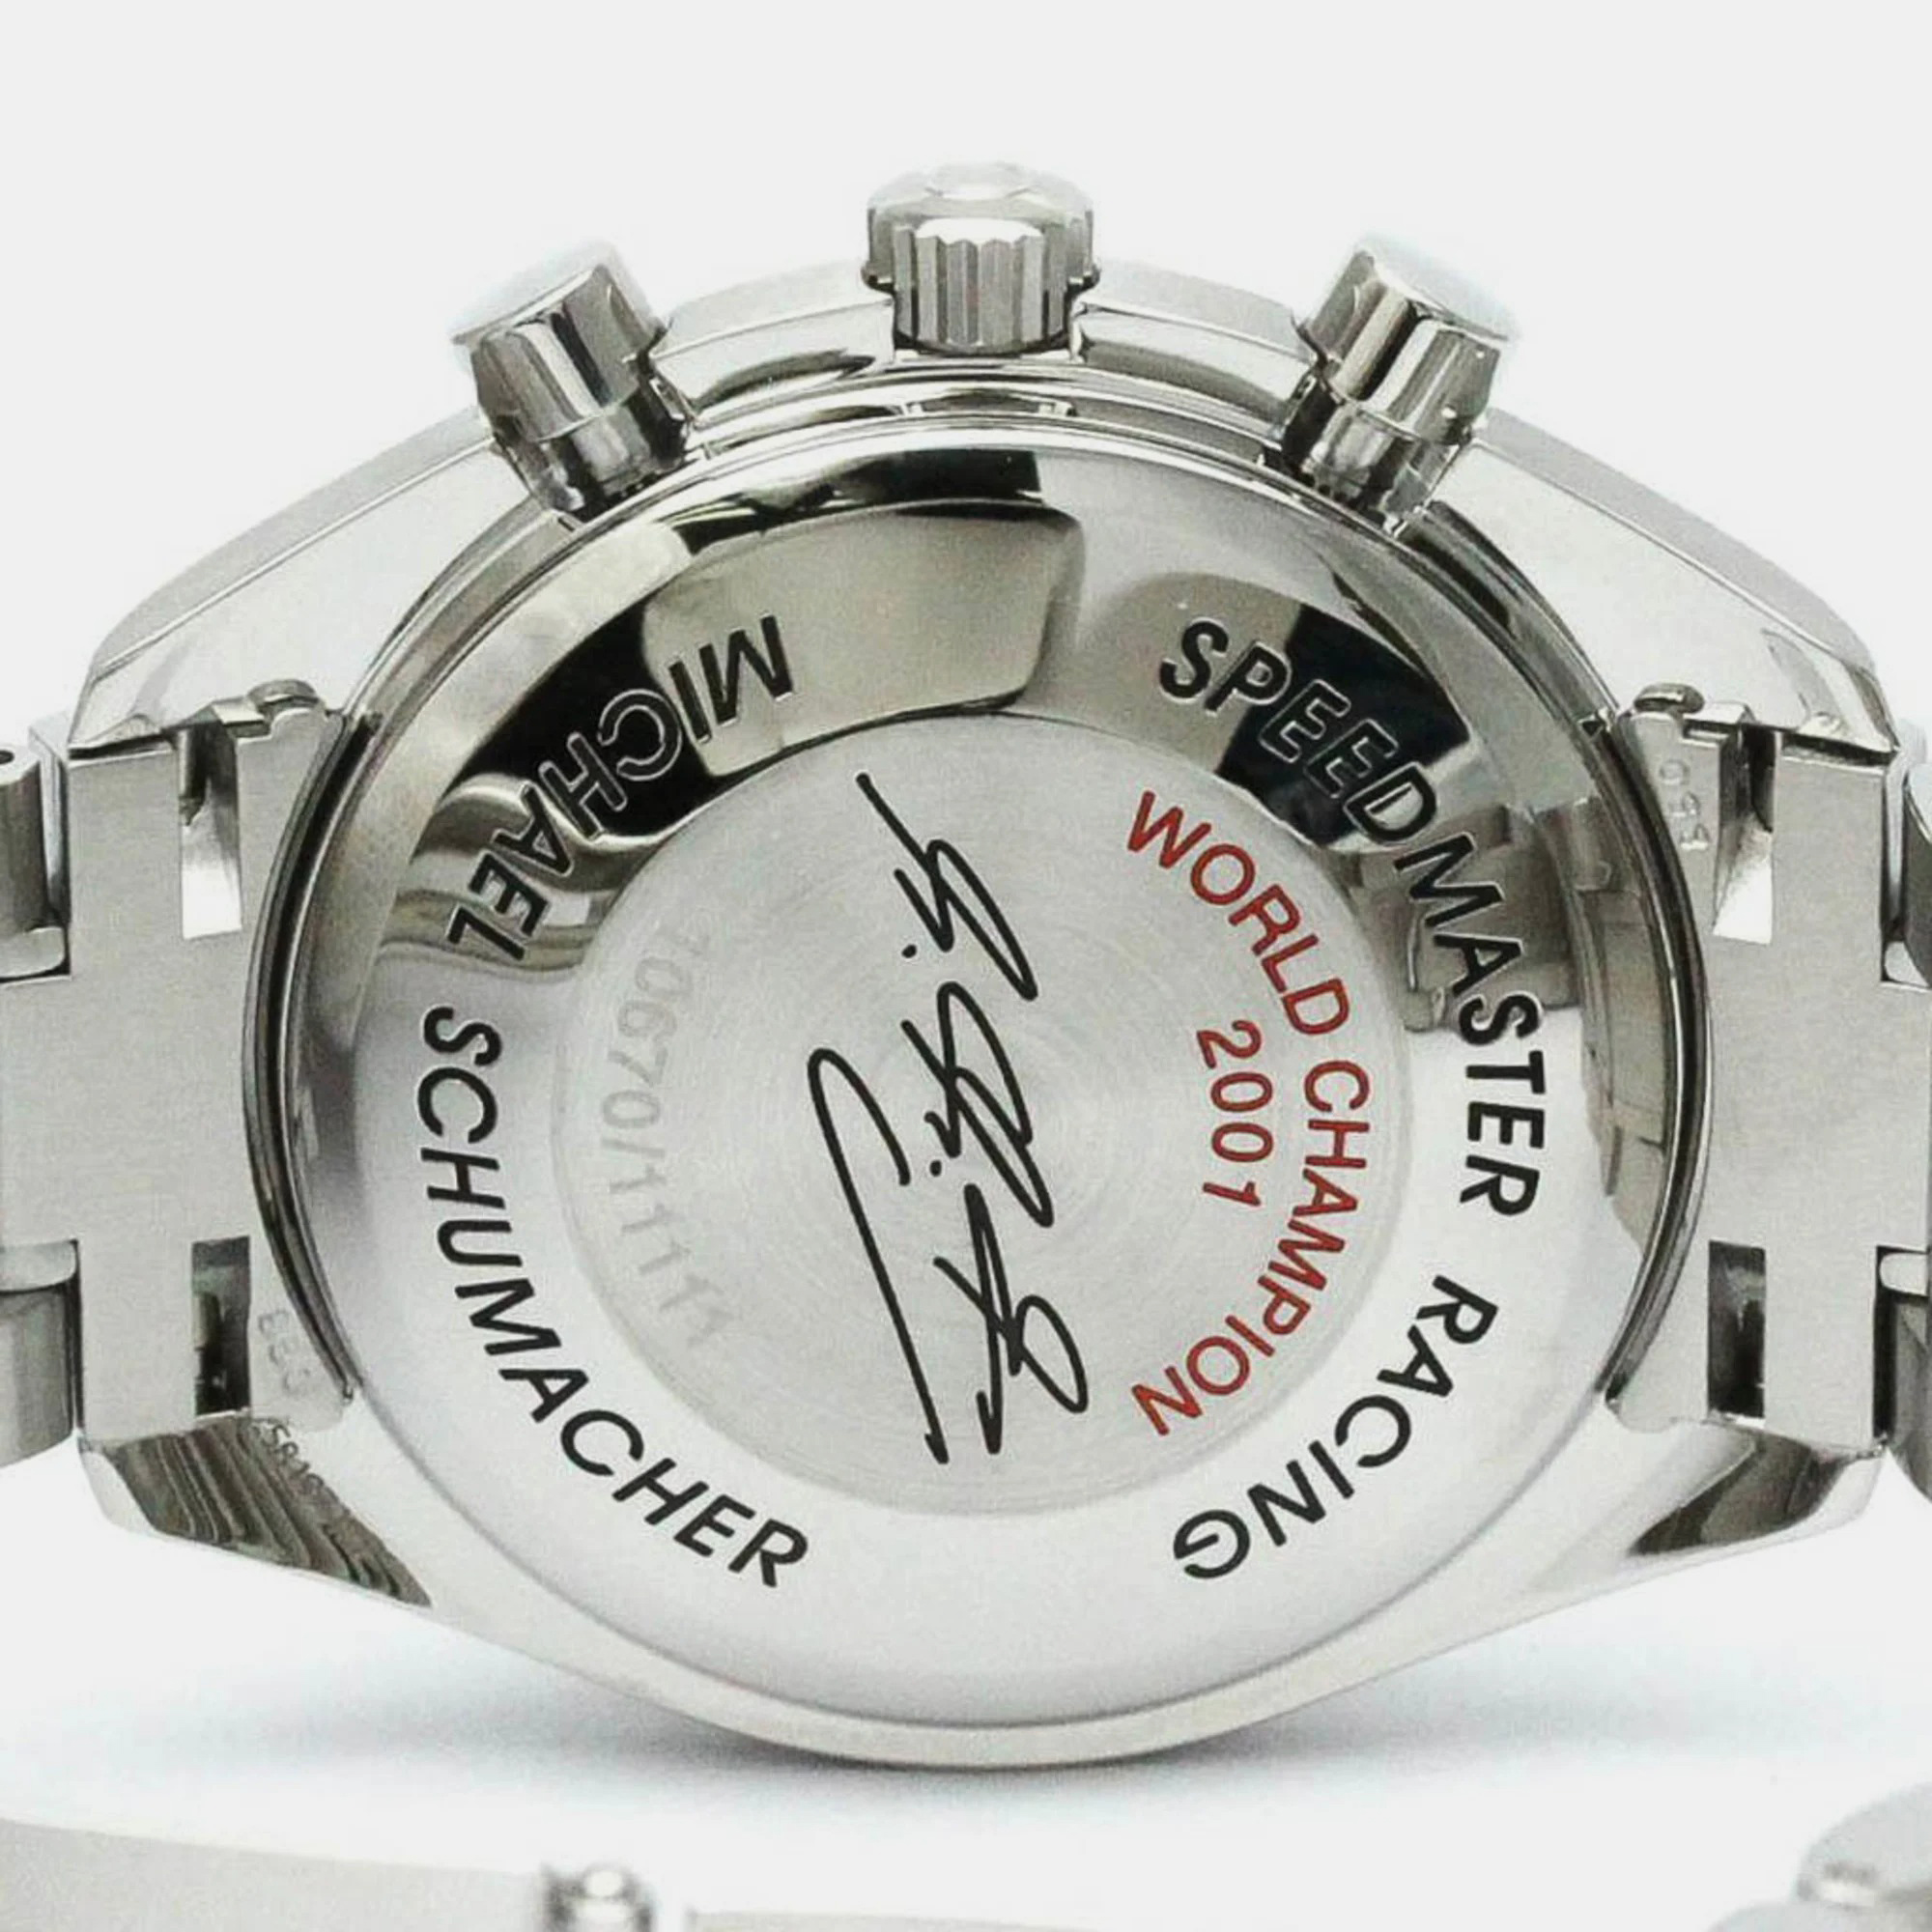 Omega Black Stainless Steel Speedmaster 3519.50 Automatic Men's Wristwatch 39 Mm